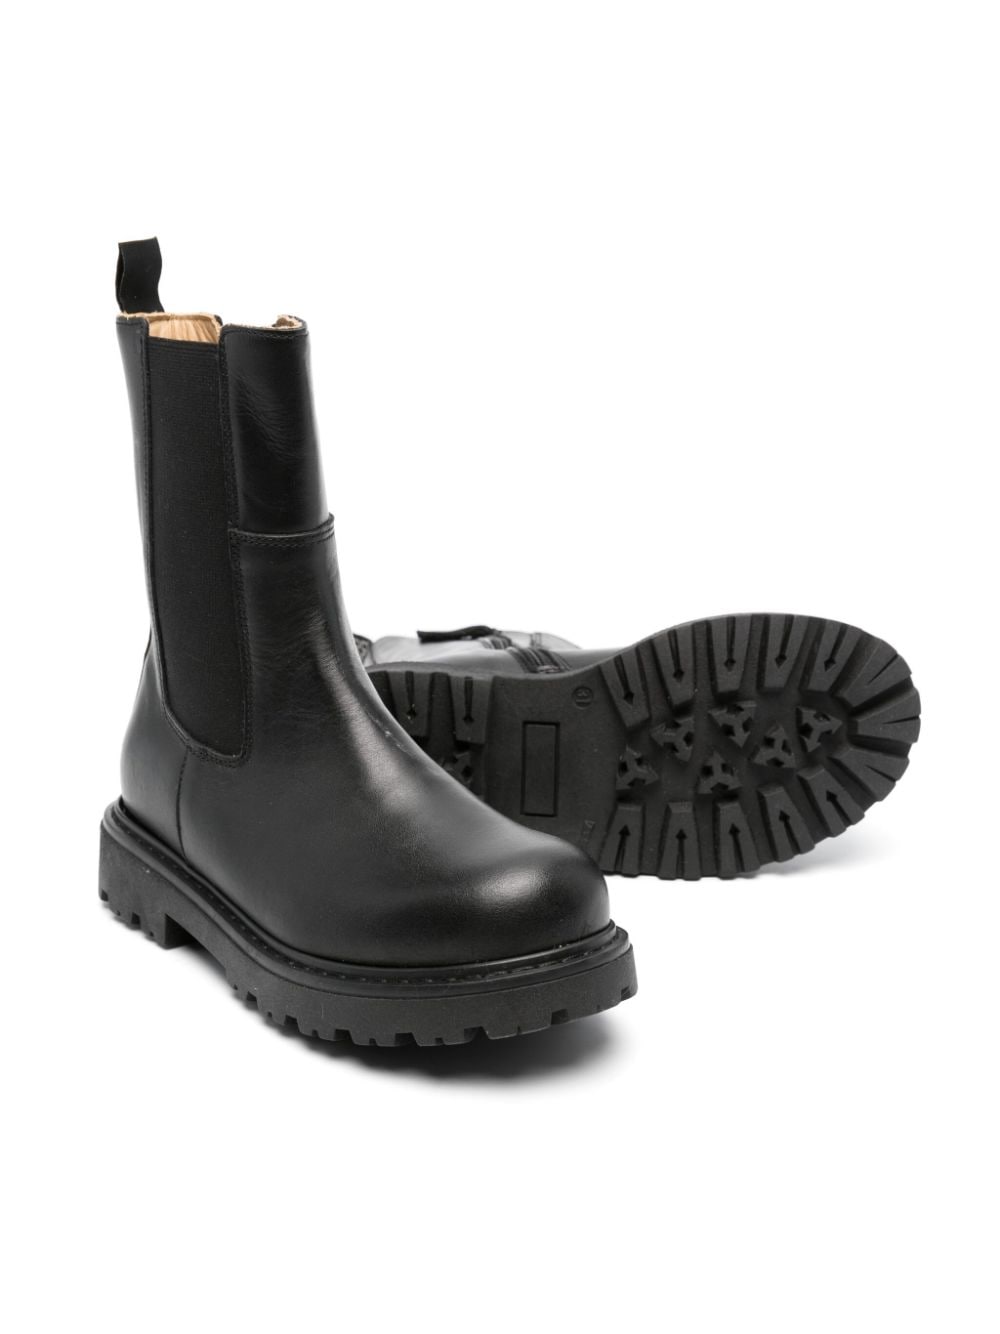 Shop Douuod Black Beatles Leather Boots